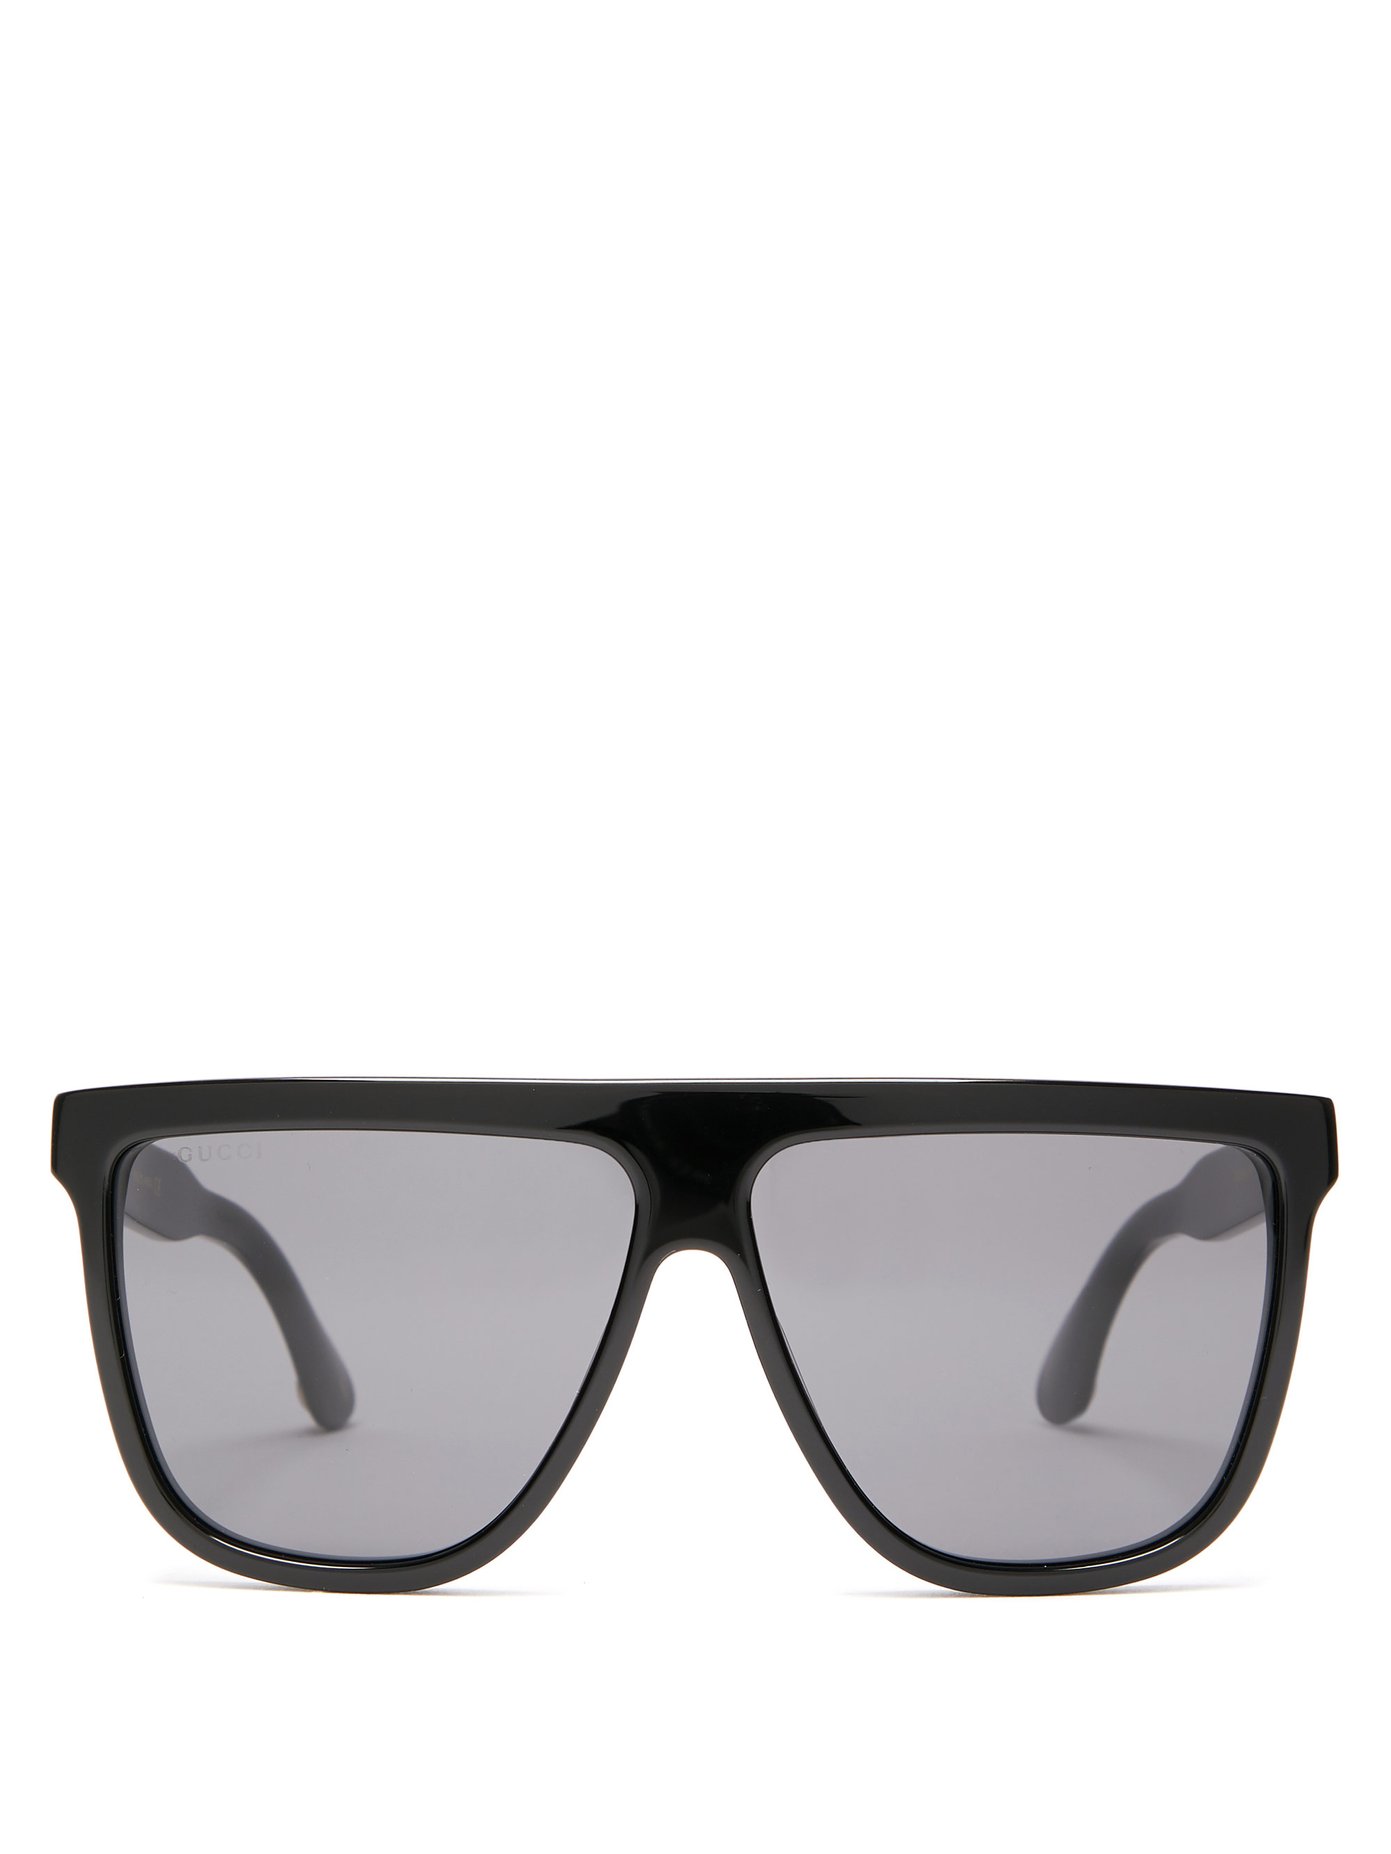 gucci flat top pilot sunglasses Cheaper 